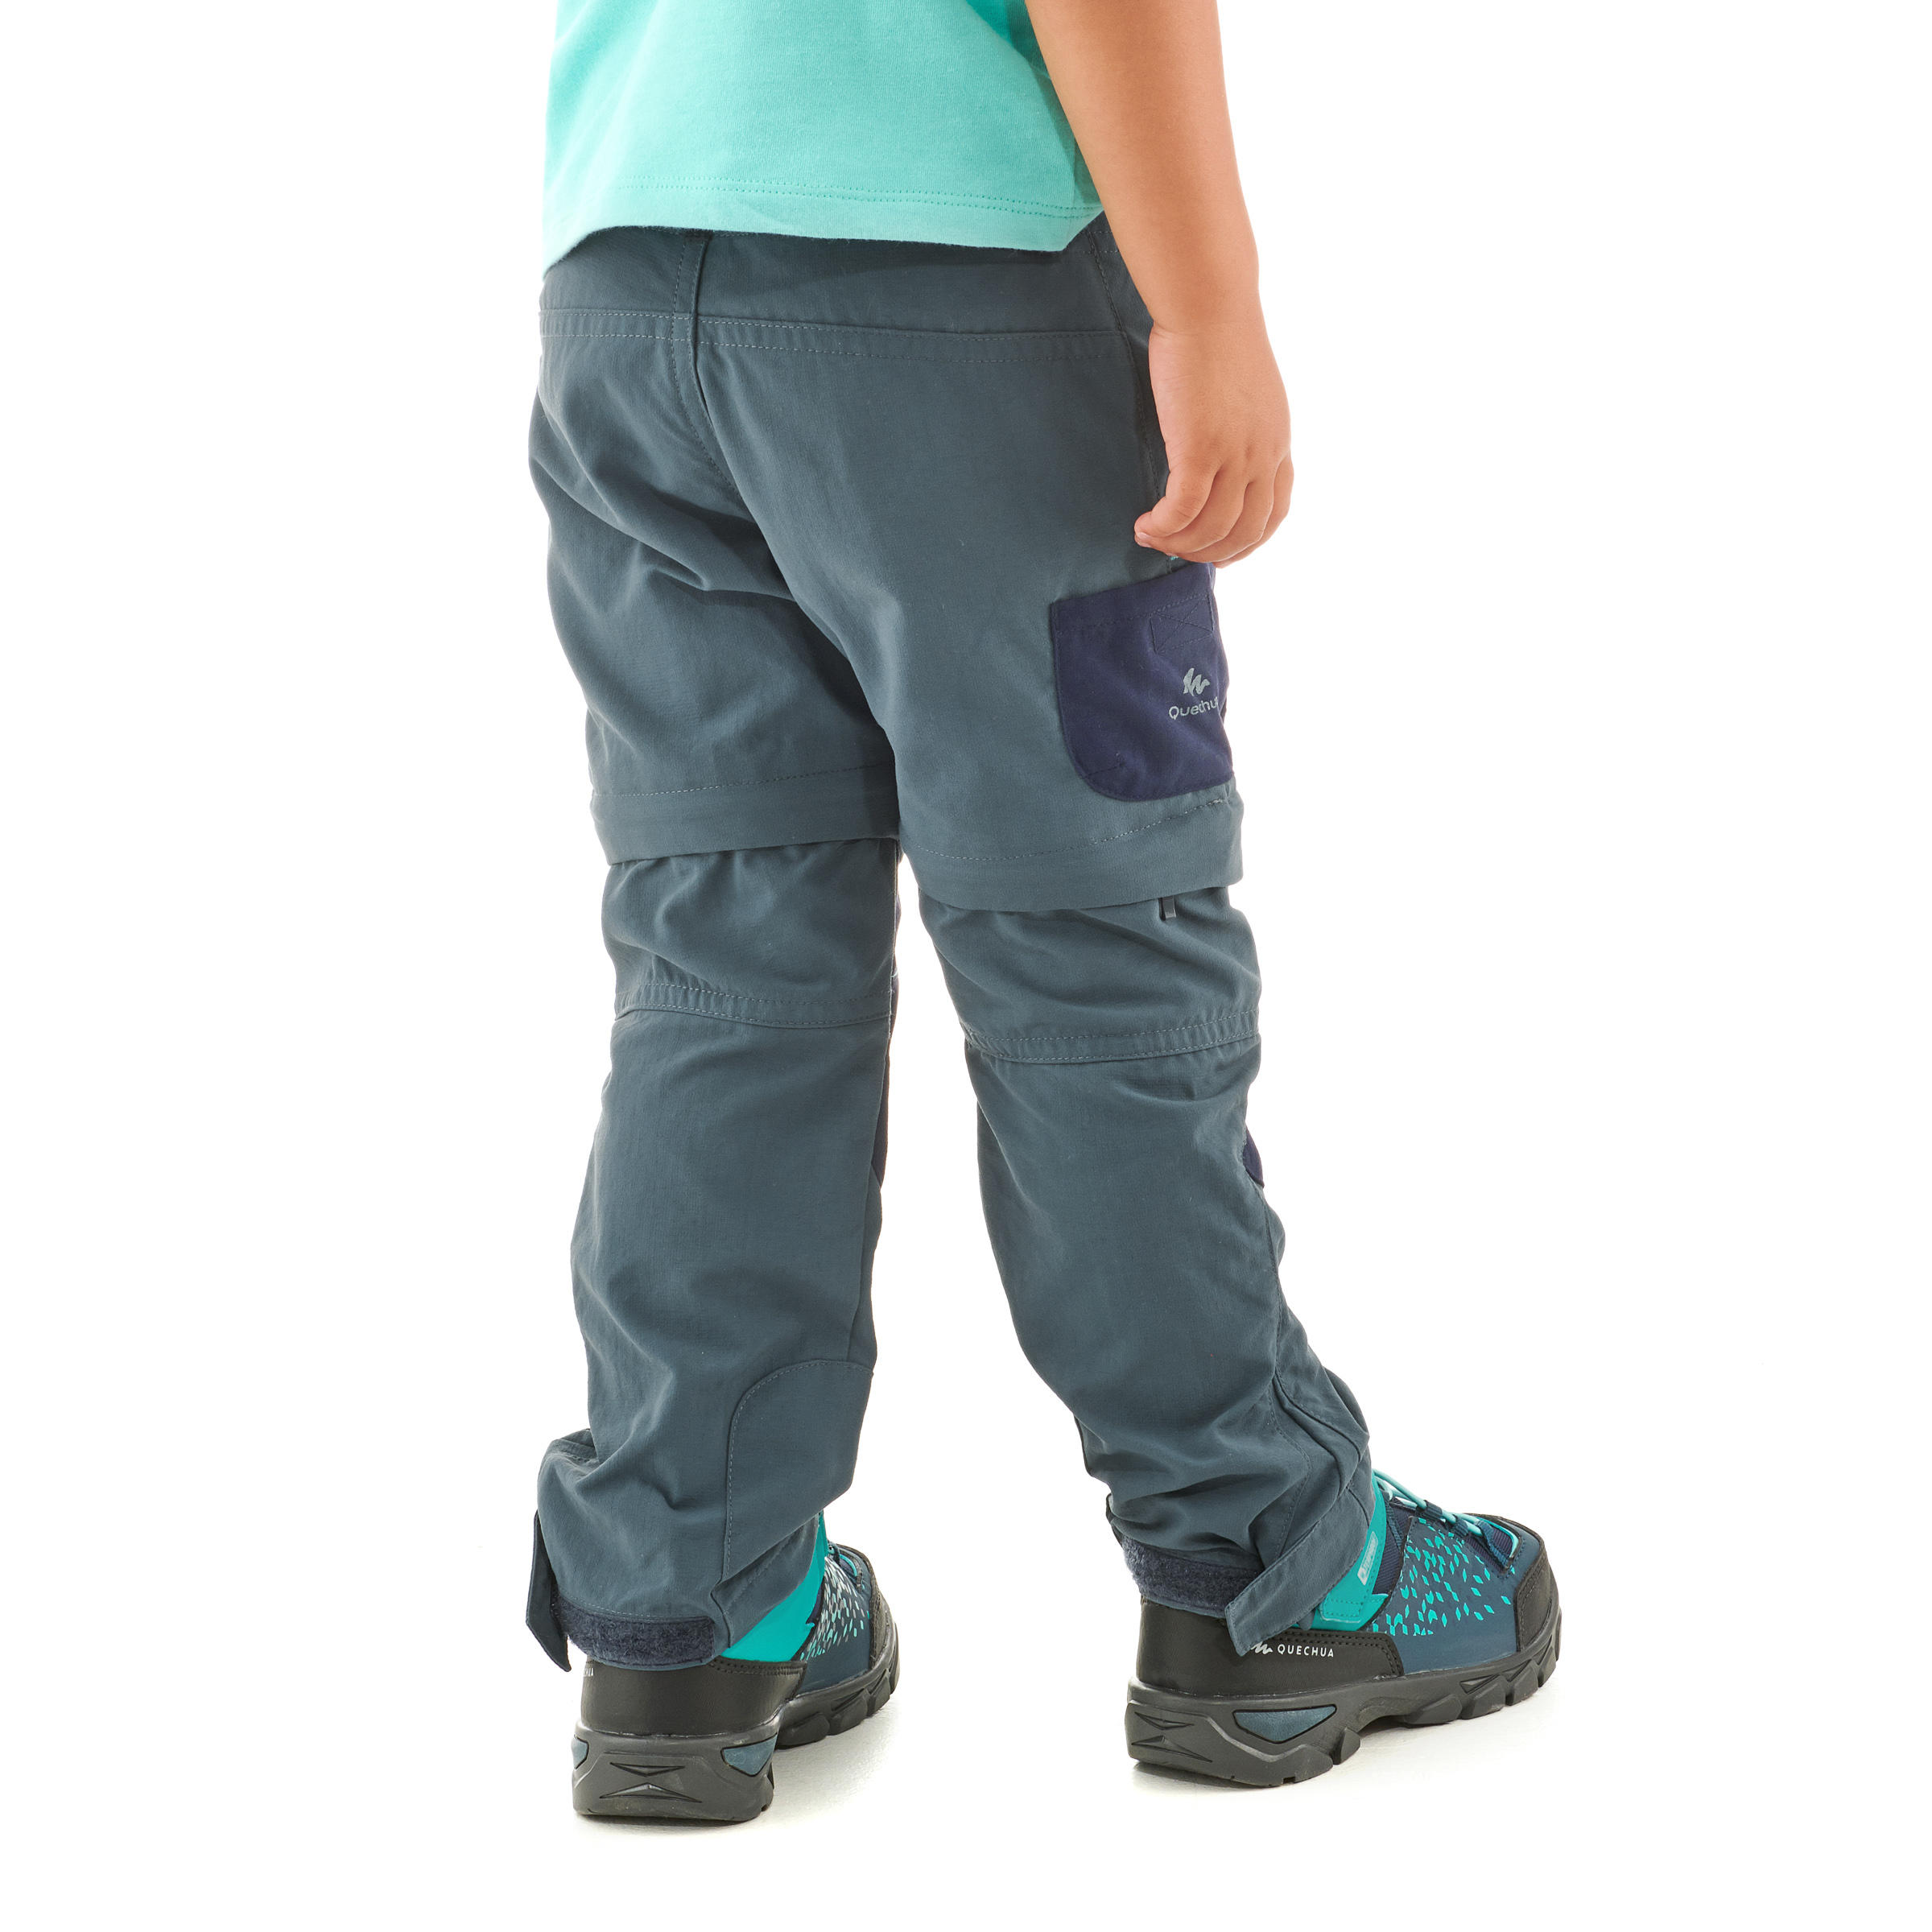 Modular hiking trousers - MH500 grey/blue - children 2-6 YEARS 6/11